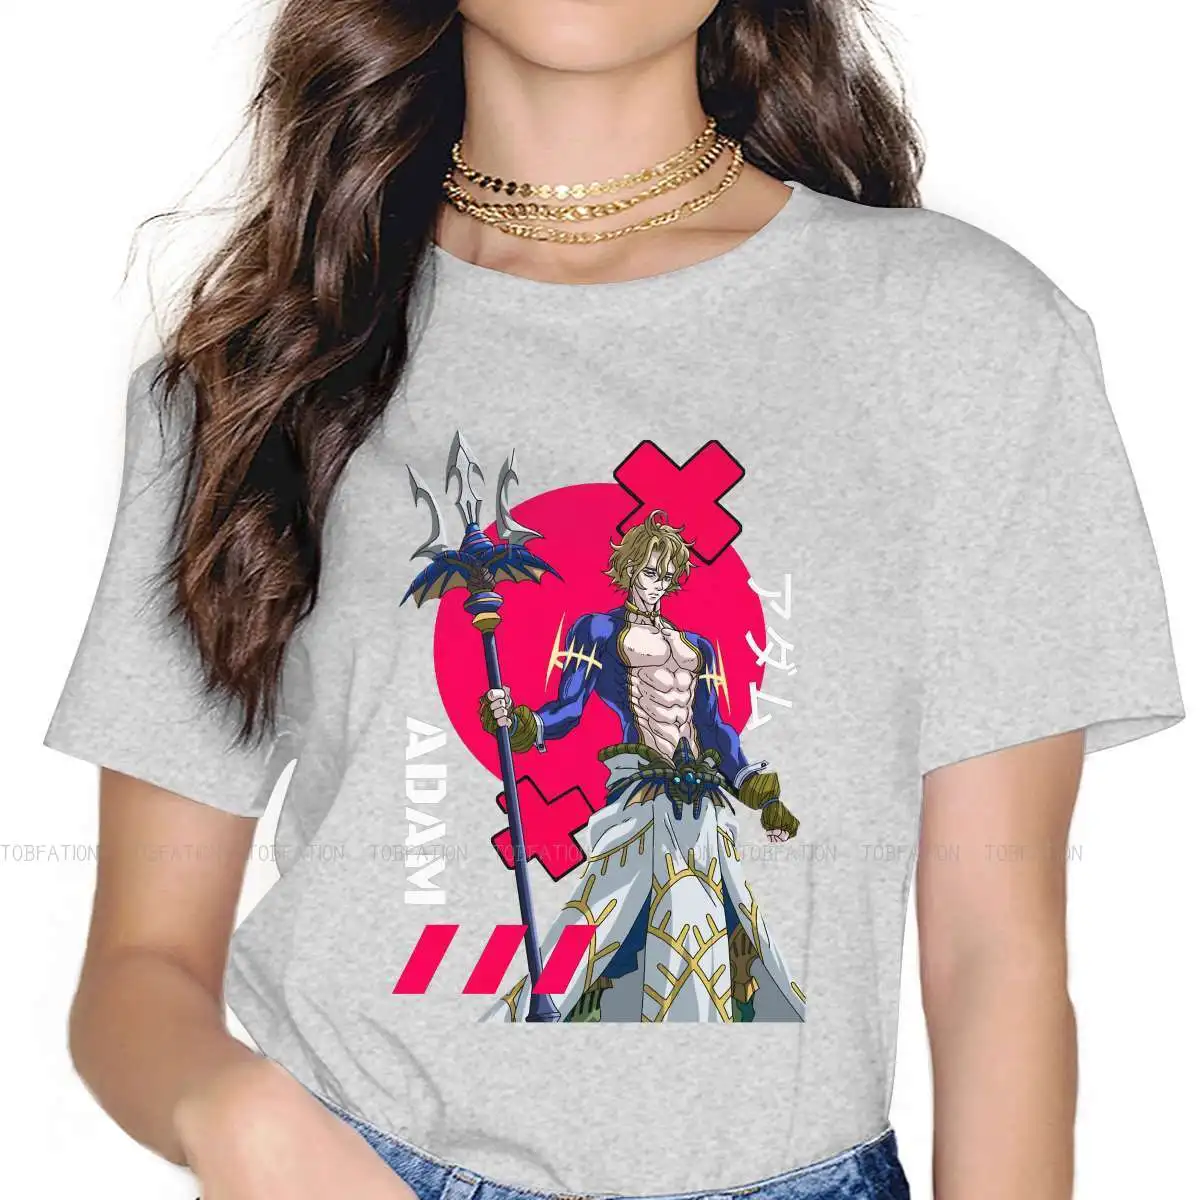 

Record of Ragnarok Japanese Action Battle Anime TShirt for Woman Girl Adam Red 5XL Summer Sweatshirts T Shirt Novelty Loose